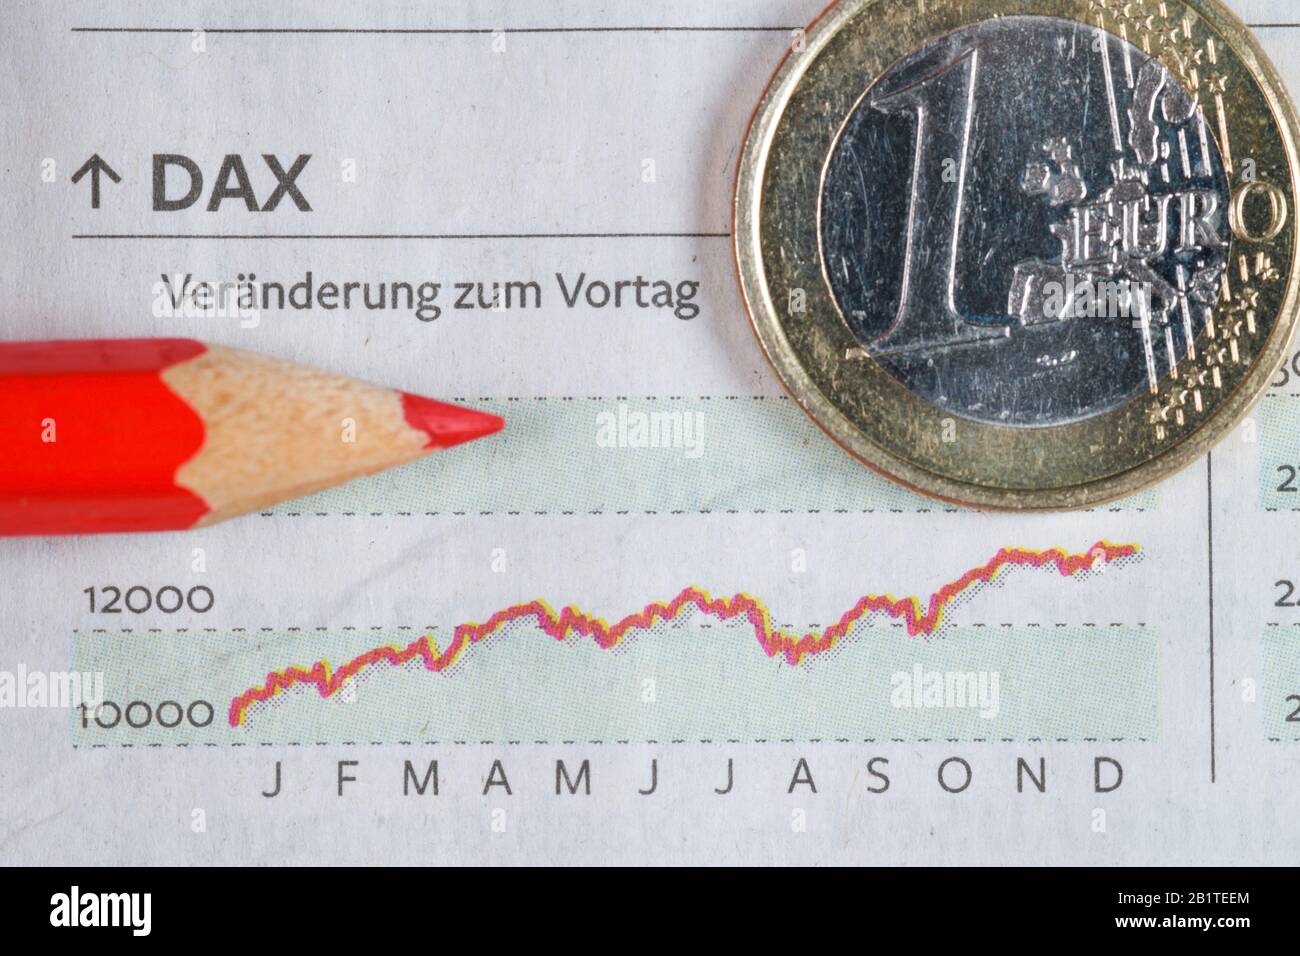 Zeitung, Börsenteil, DAX Stock Photo